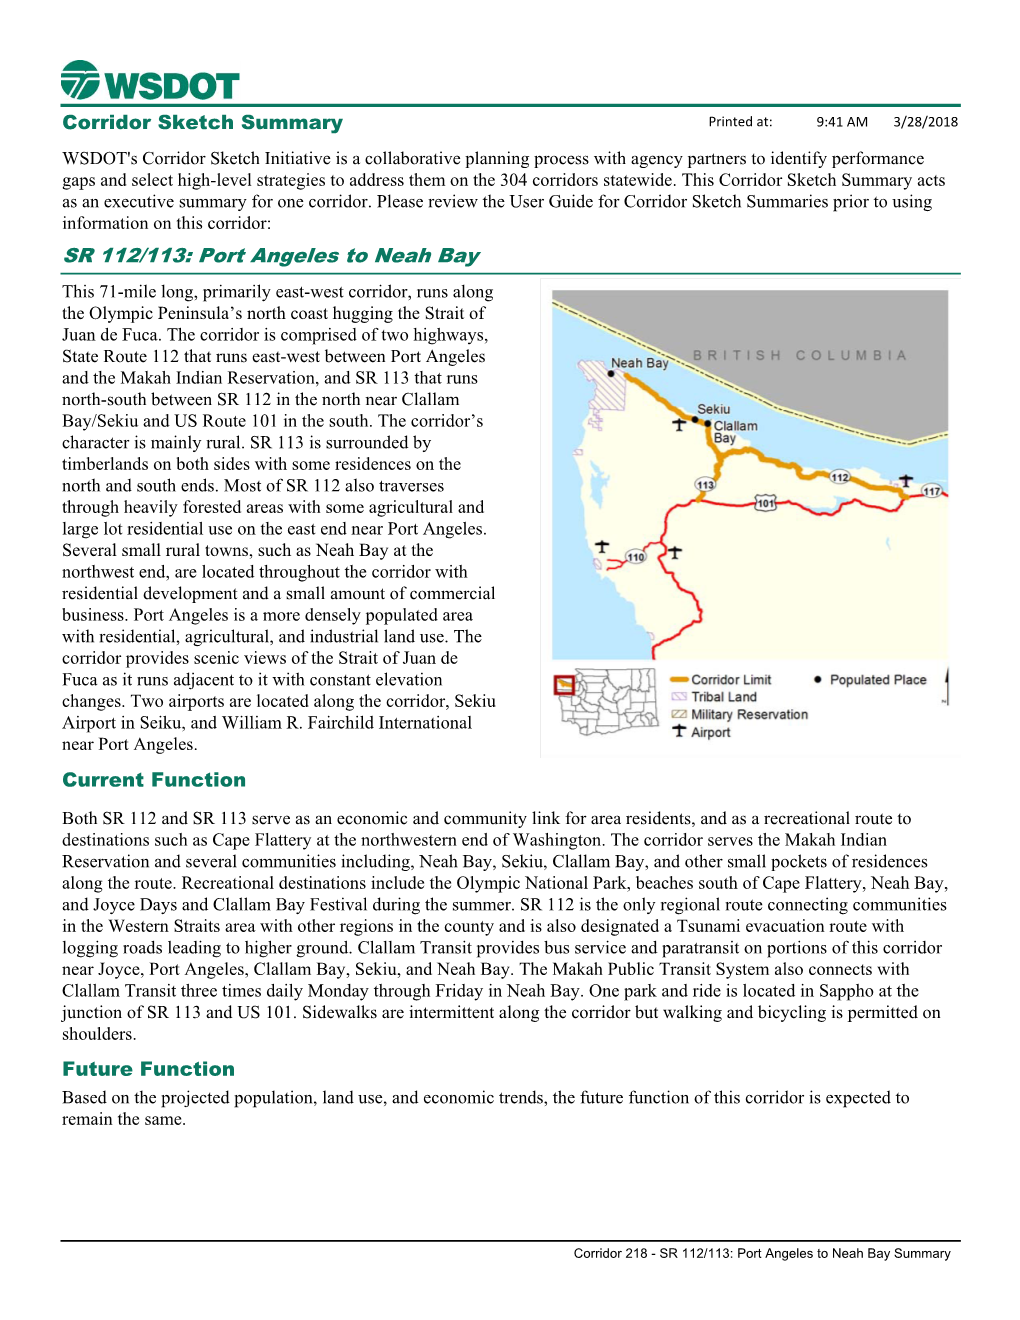 SR 112/113: Port Angeles to Neah Bay Corridor Sketch Summary